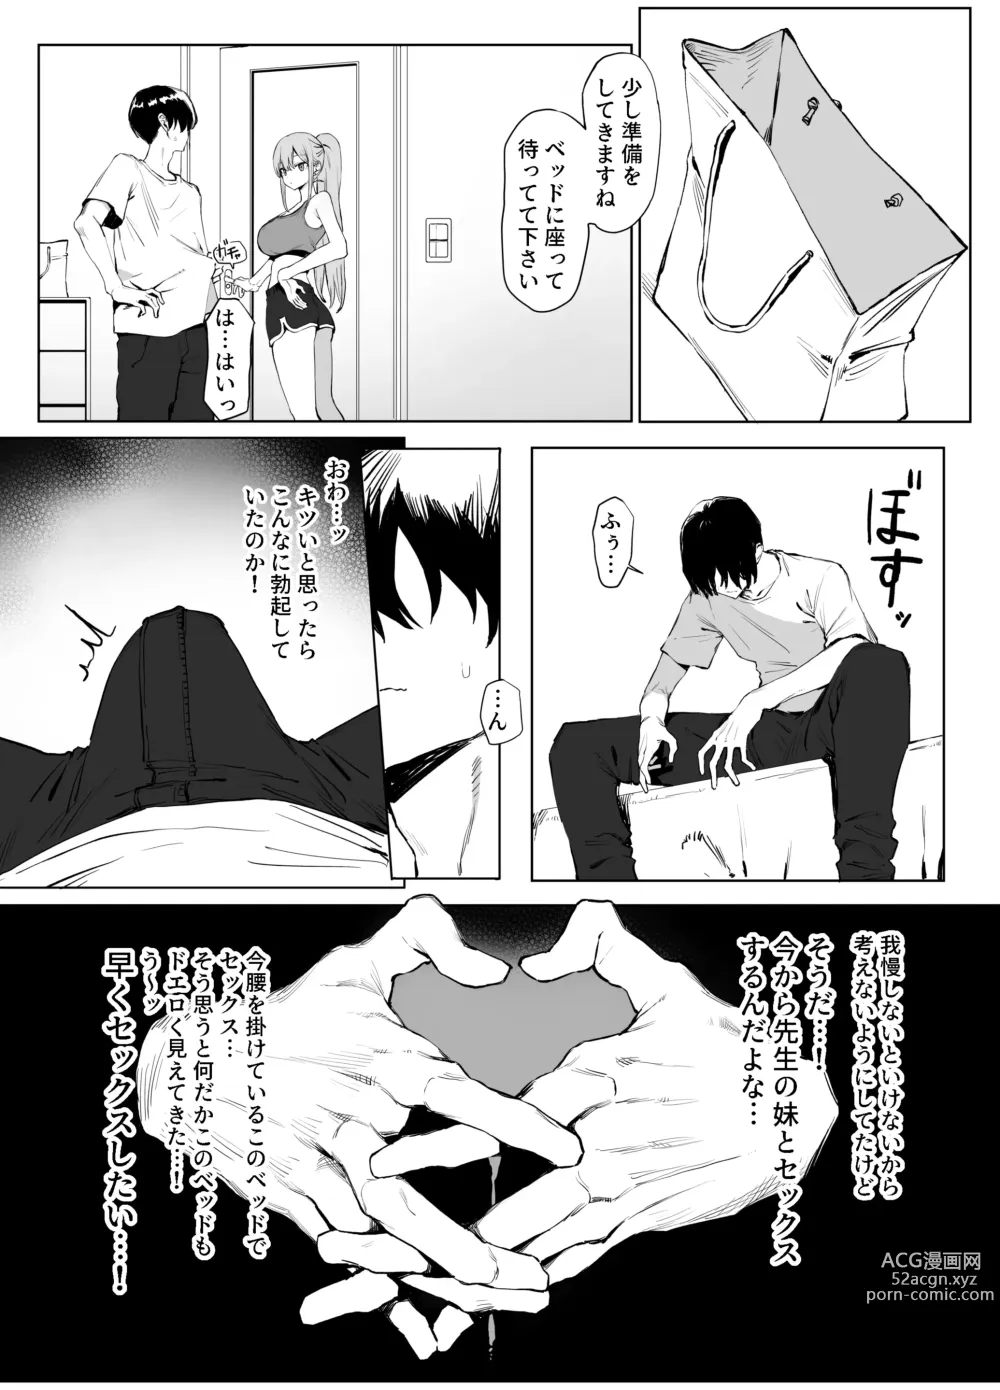 Page 7 of doujinshi Seikoui Jisshuu 2